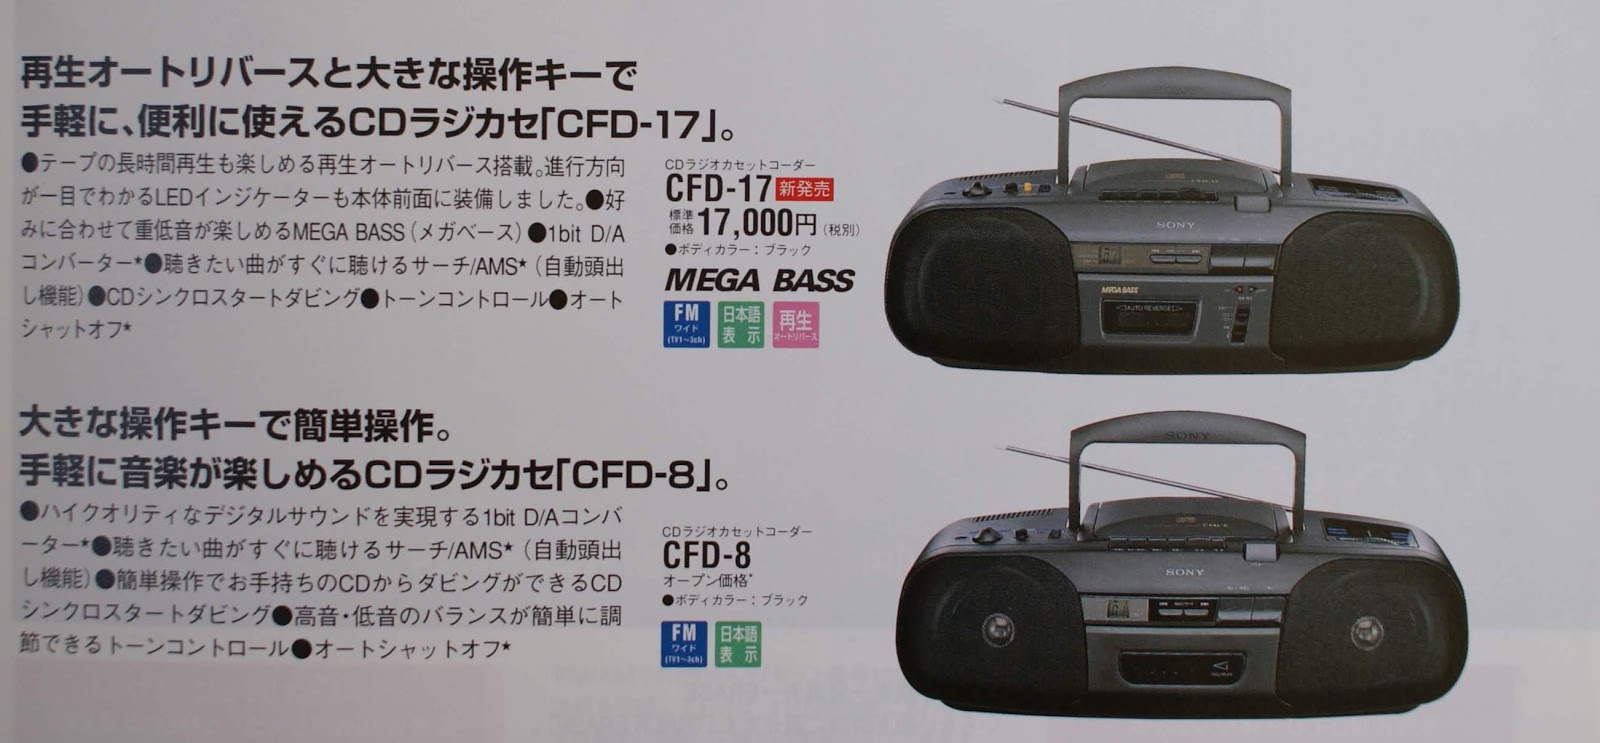 SONY CFD-W57 CDラジオダブルカセットデッキ カセットコーダー